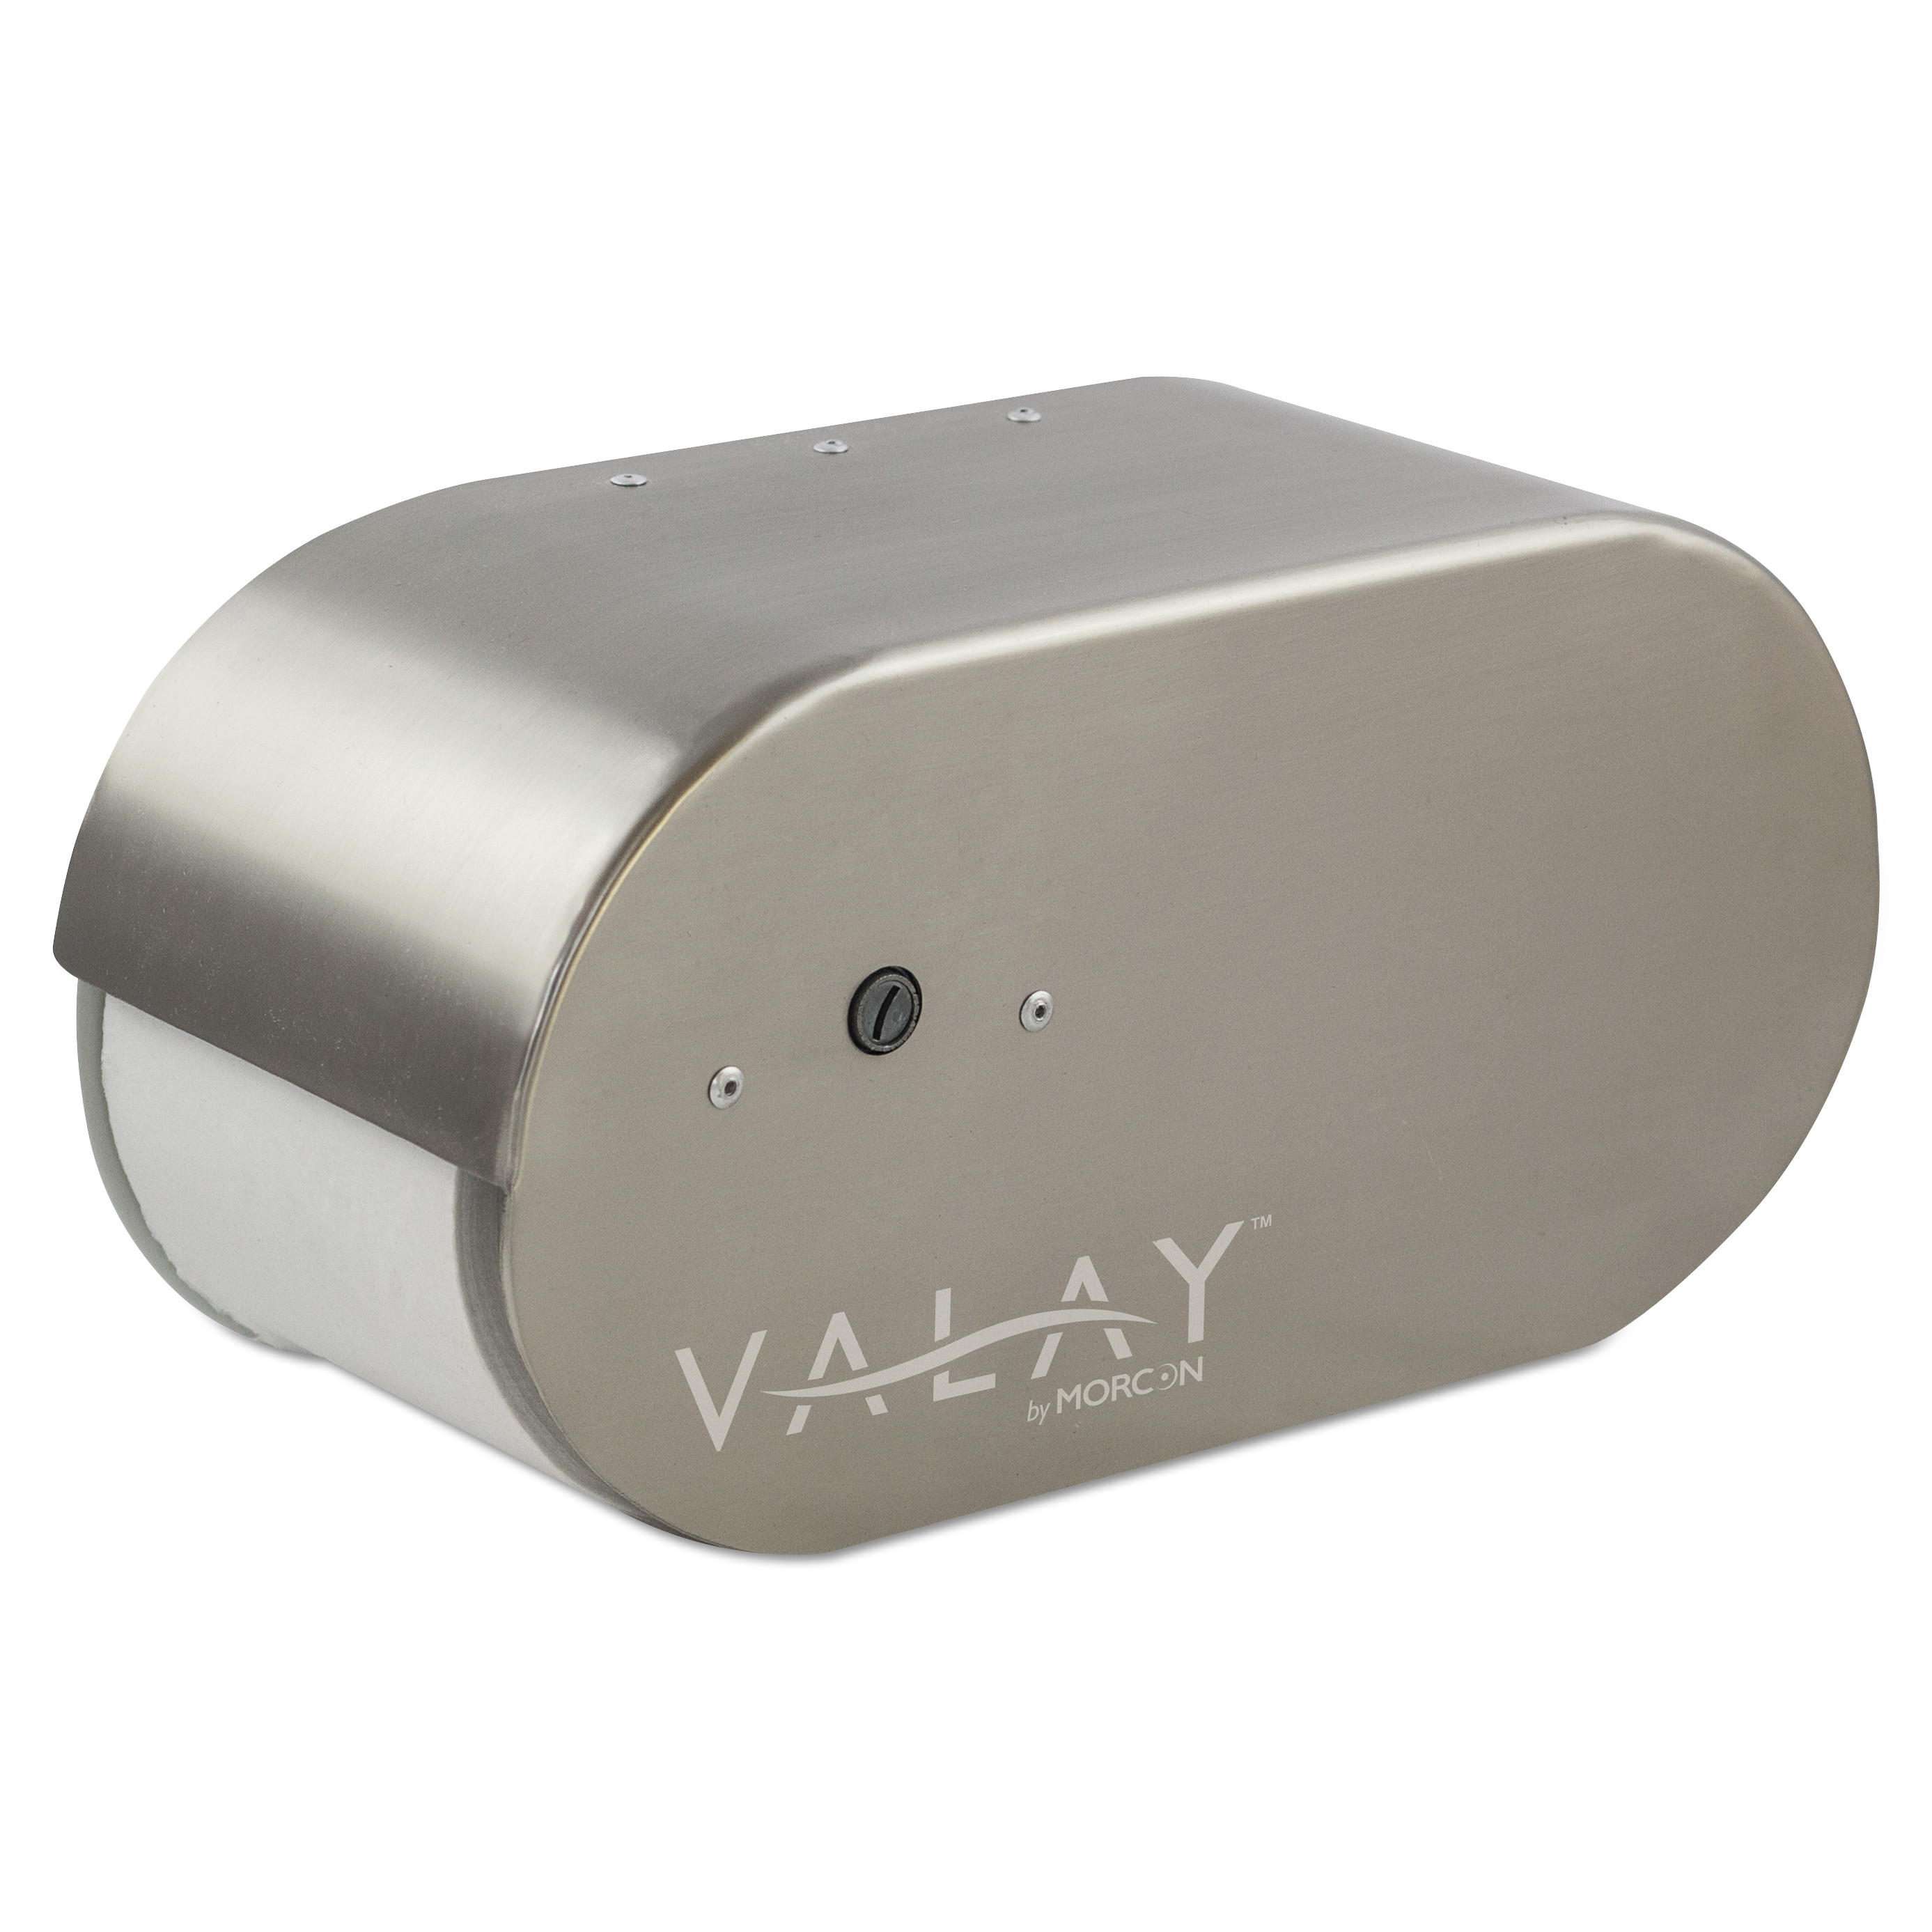 Valay Bathroom Tissue Dispenser, Metal, 4.75 x 12.5 x 6.5, Silver